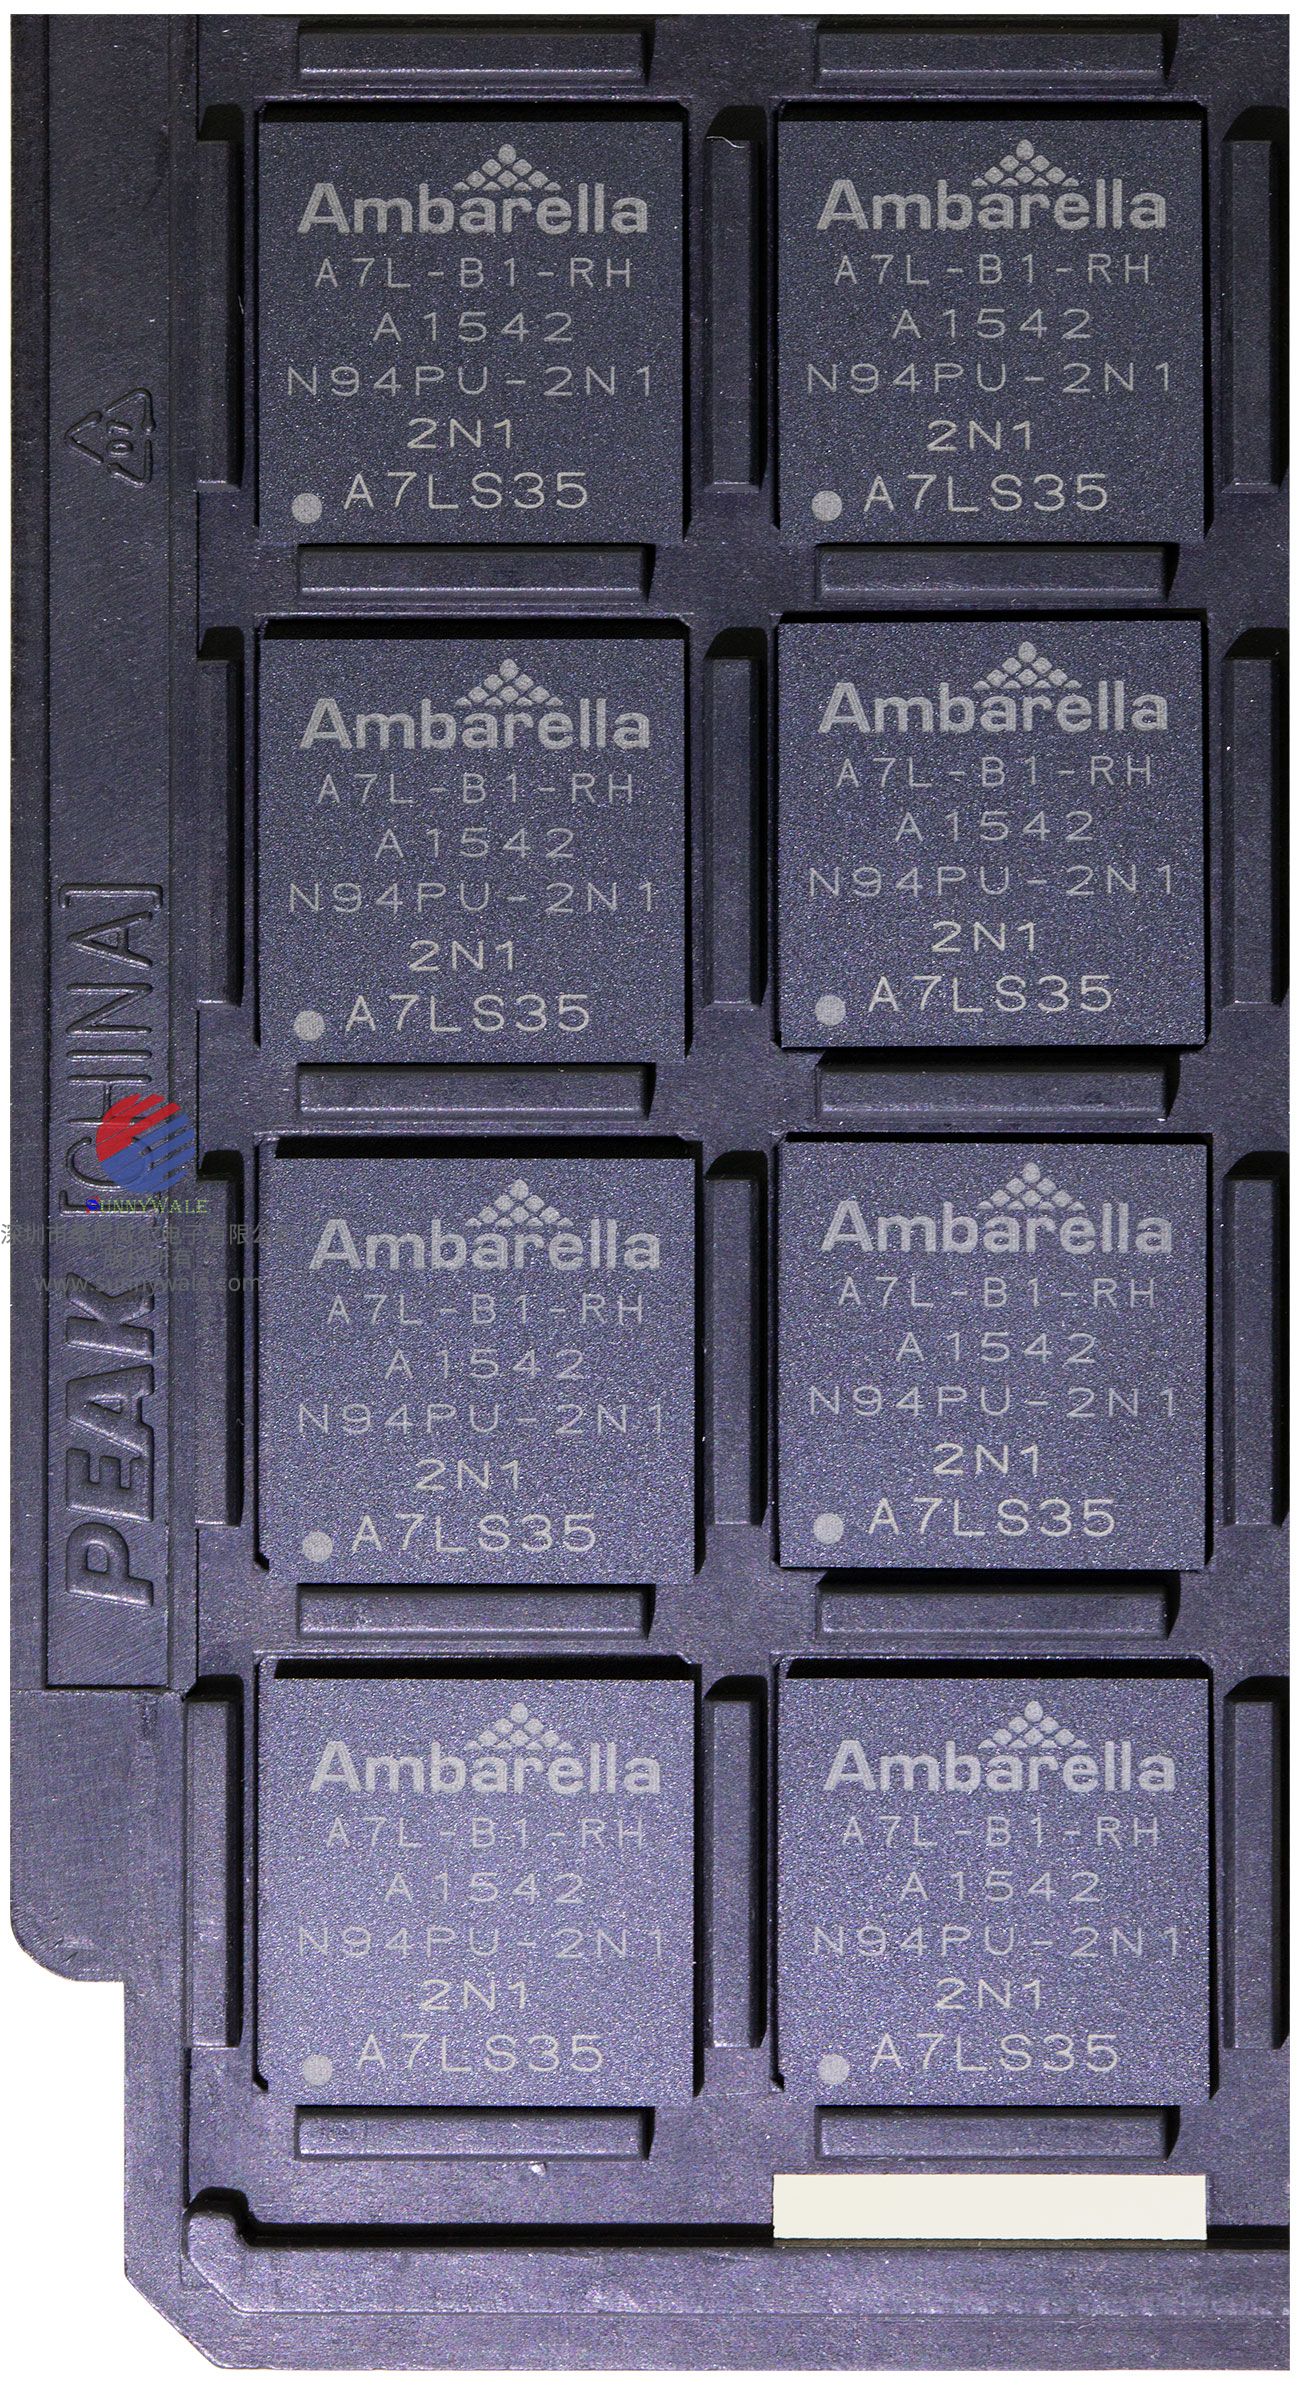 A7LS35，1080p@60fps图像处理器、H.264编码器、ARM11 SoC， 安霸Ambarella，用于运动相机、汽车行驶记录仪、警用执法记录仪、安防监控摄像机解决方案